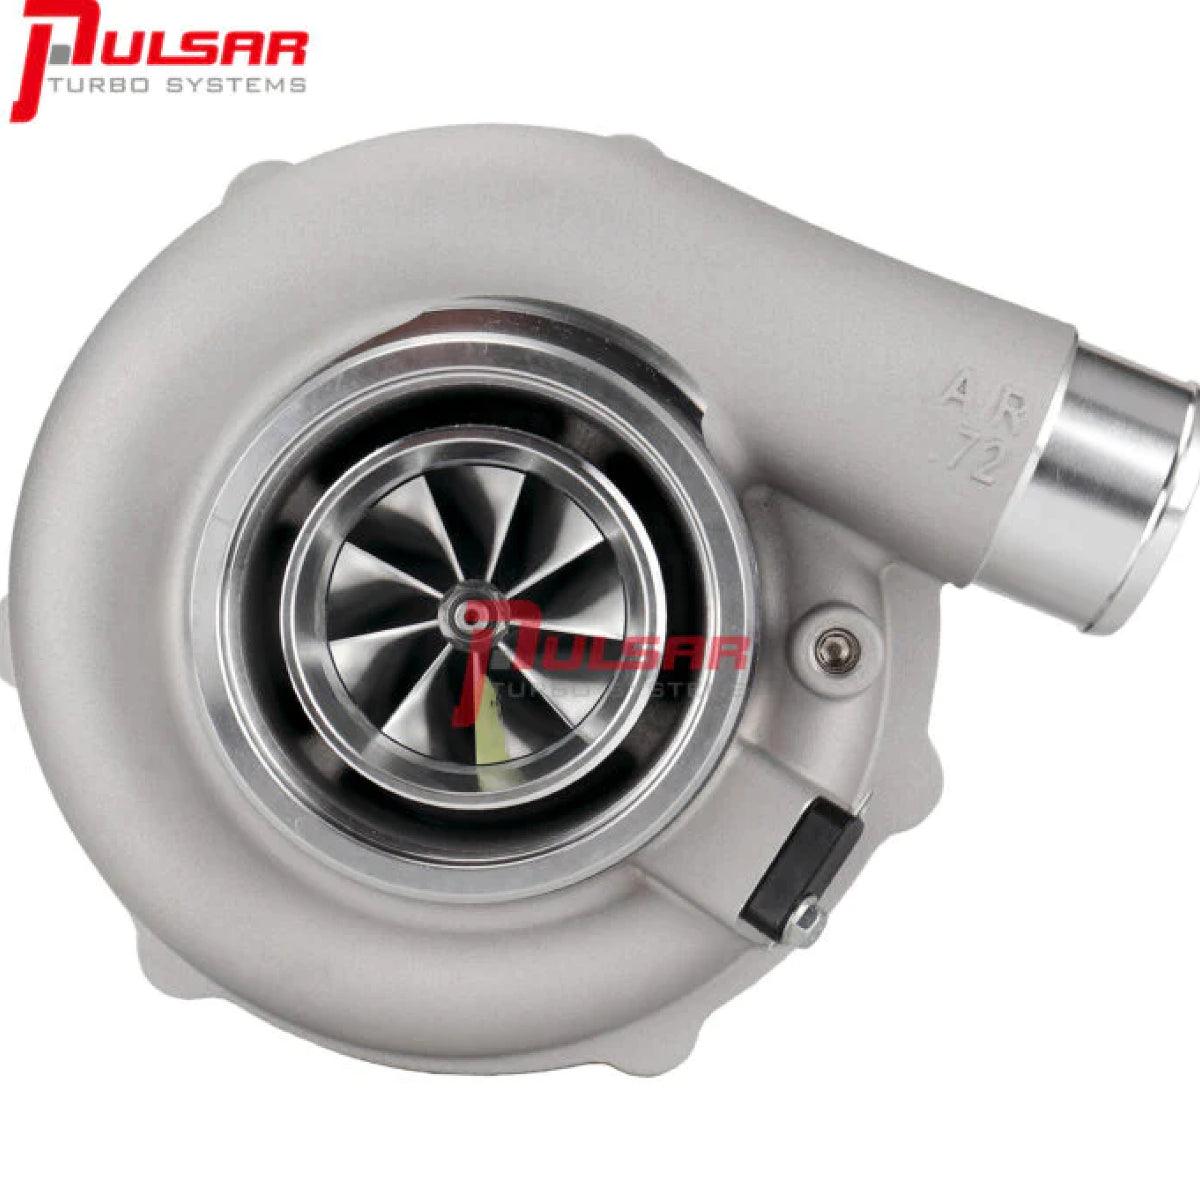 PULSAR 6255G PTG30 900HP 62mm Dual Ball Bearing TurboProlink Performance